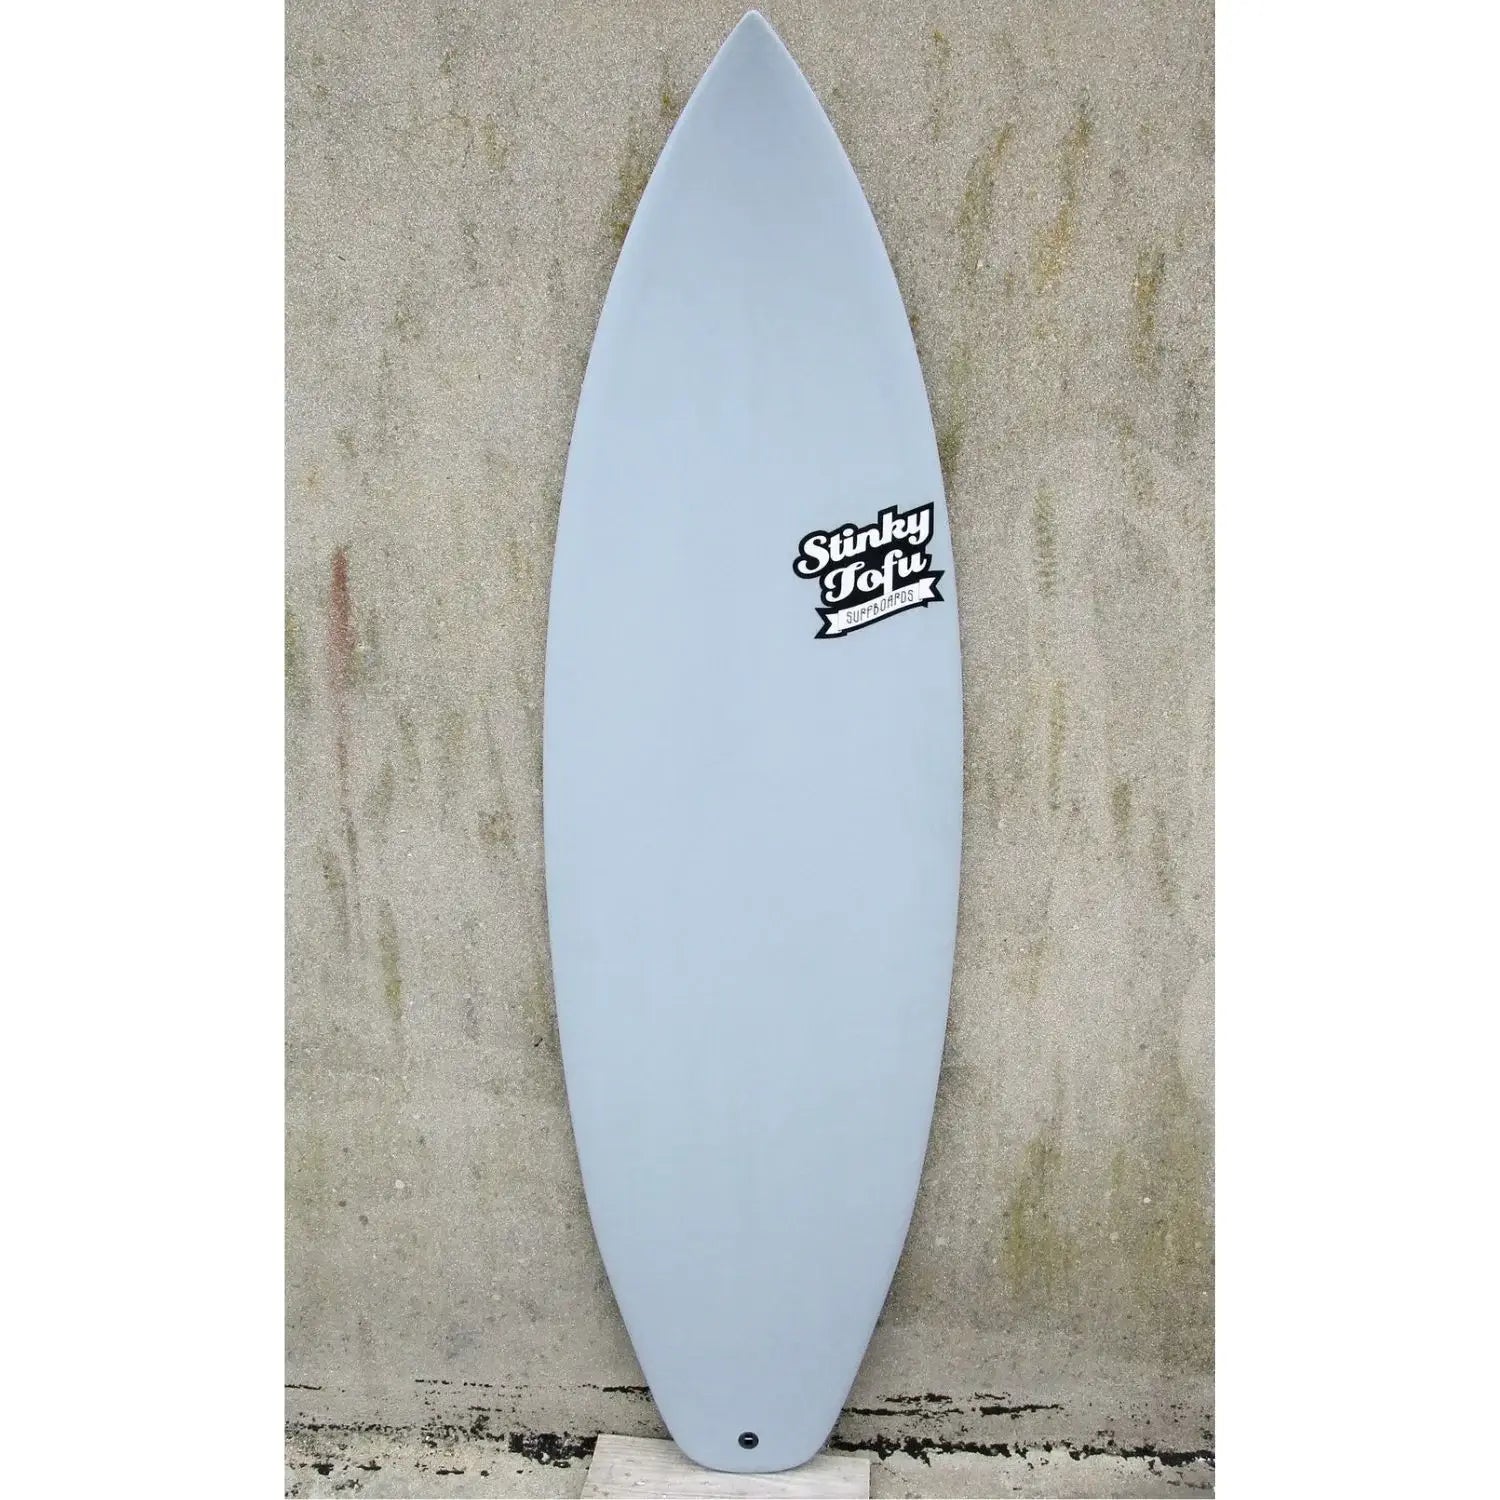 BEACH BUM — STINKY TOFU SURFBOARDS